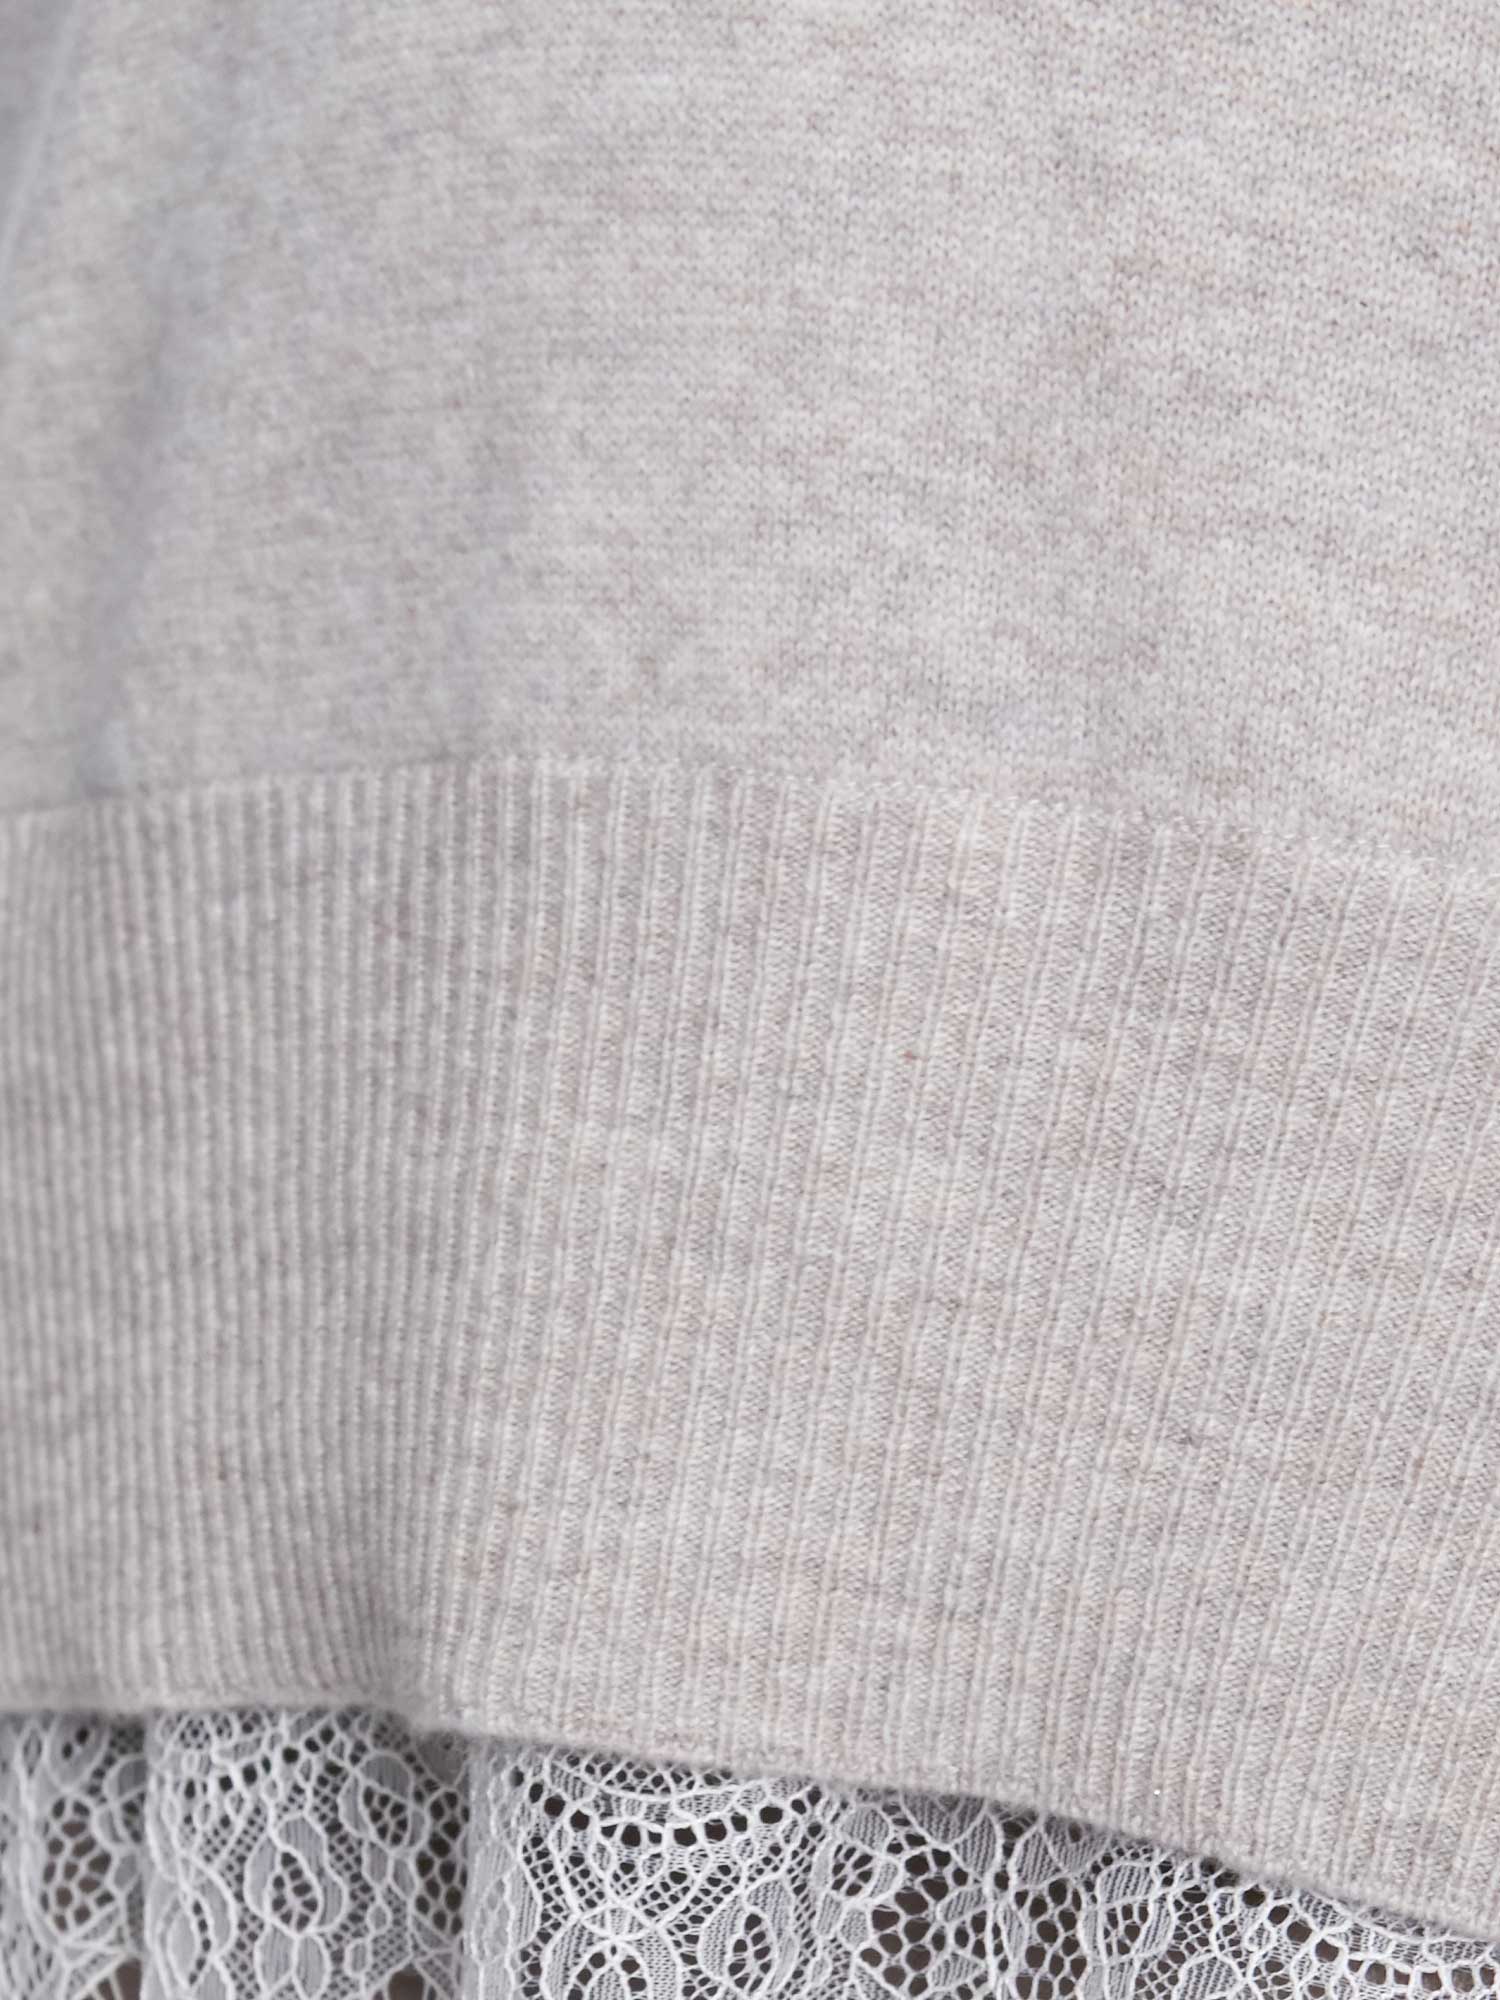 Light grey lace layered v-neck sweater close up